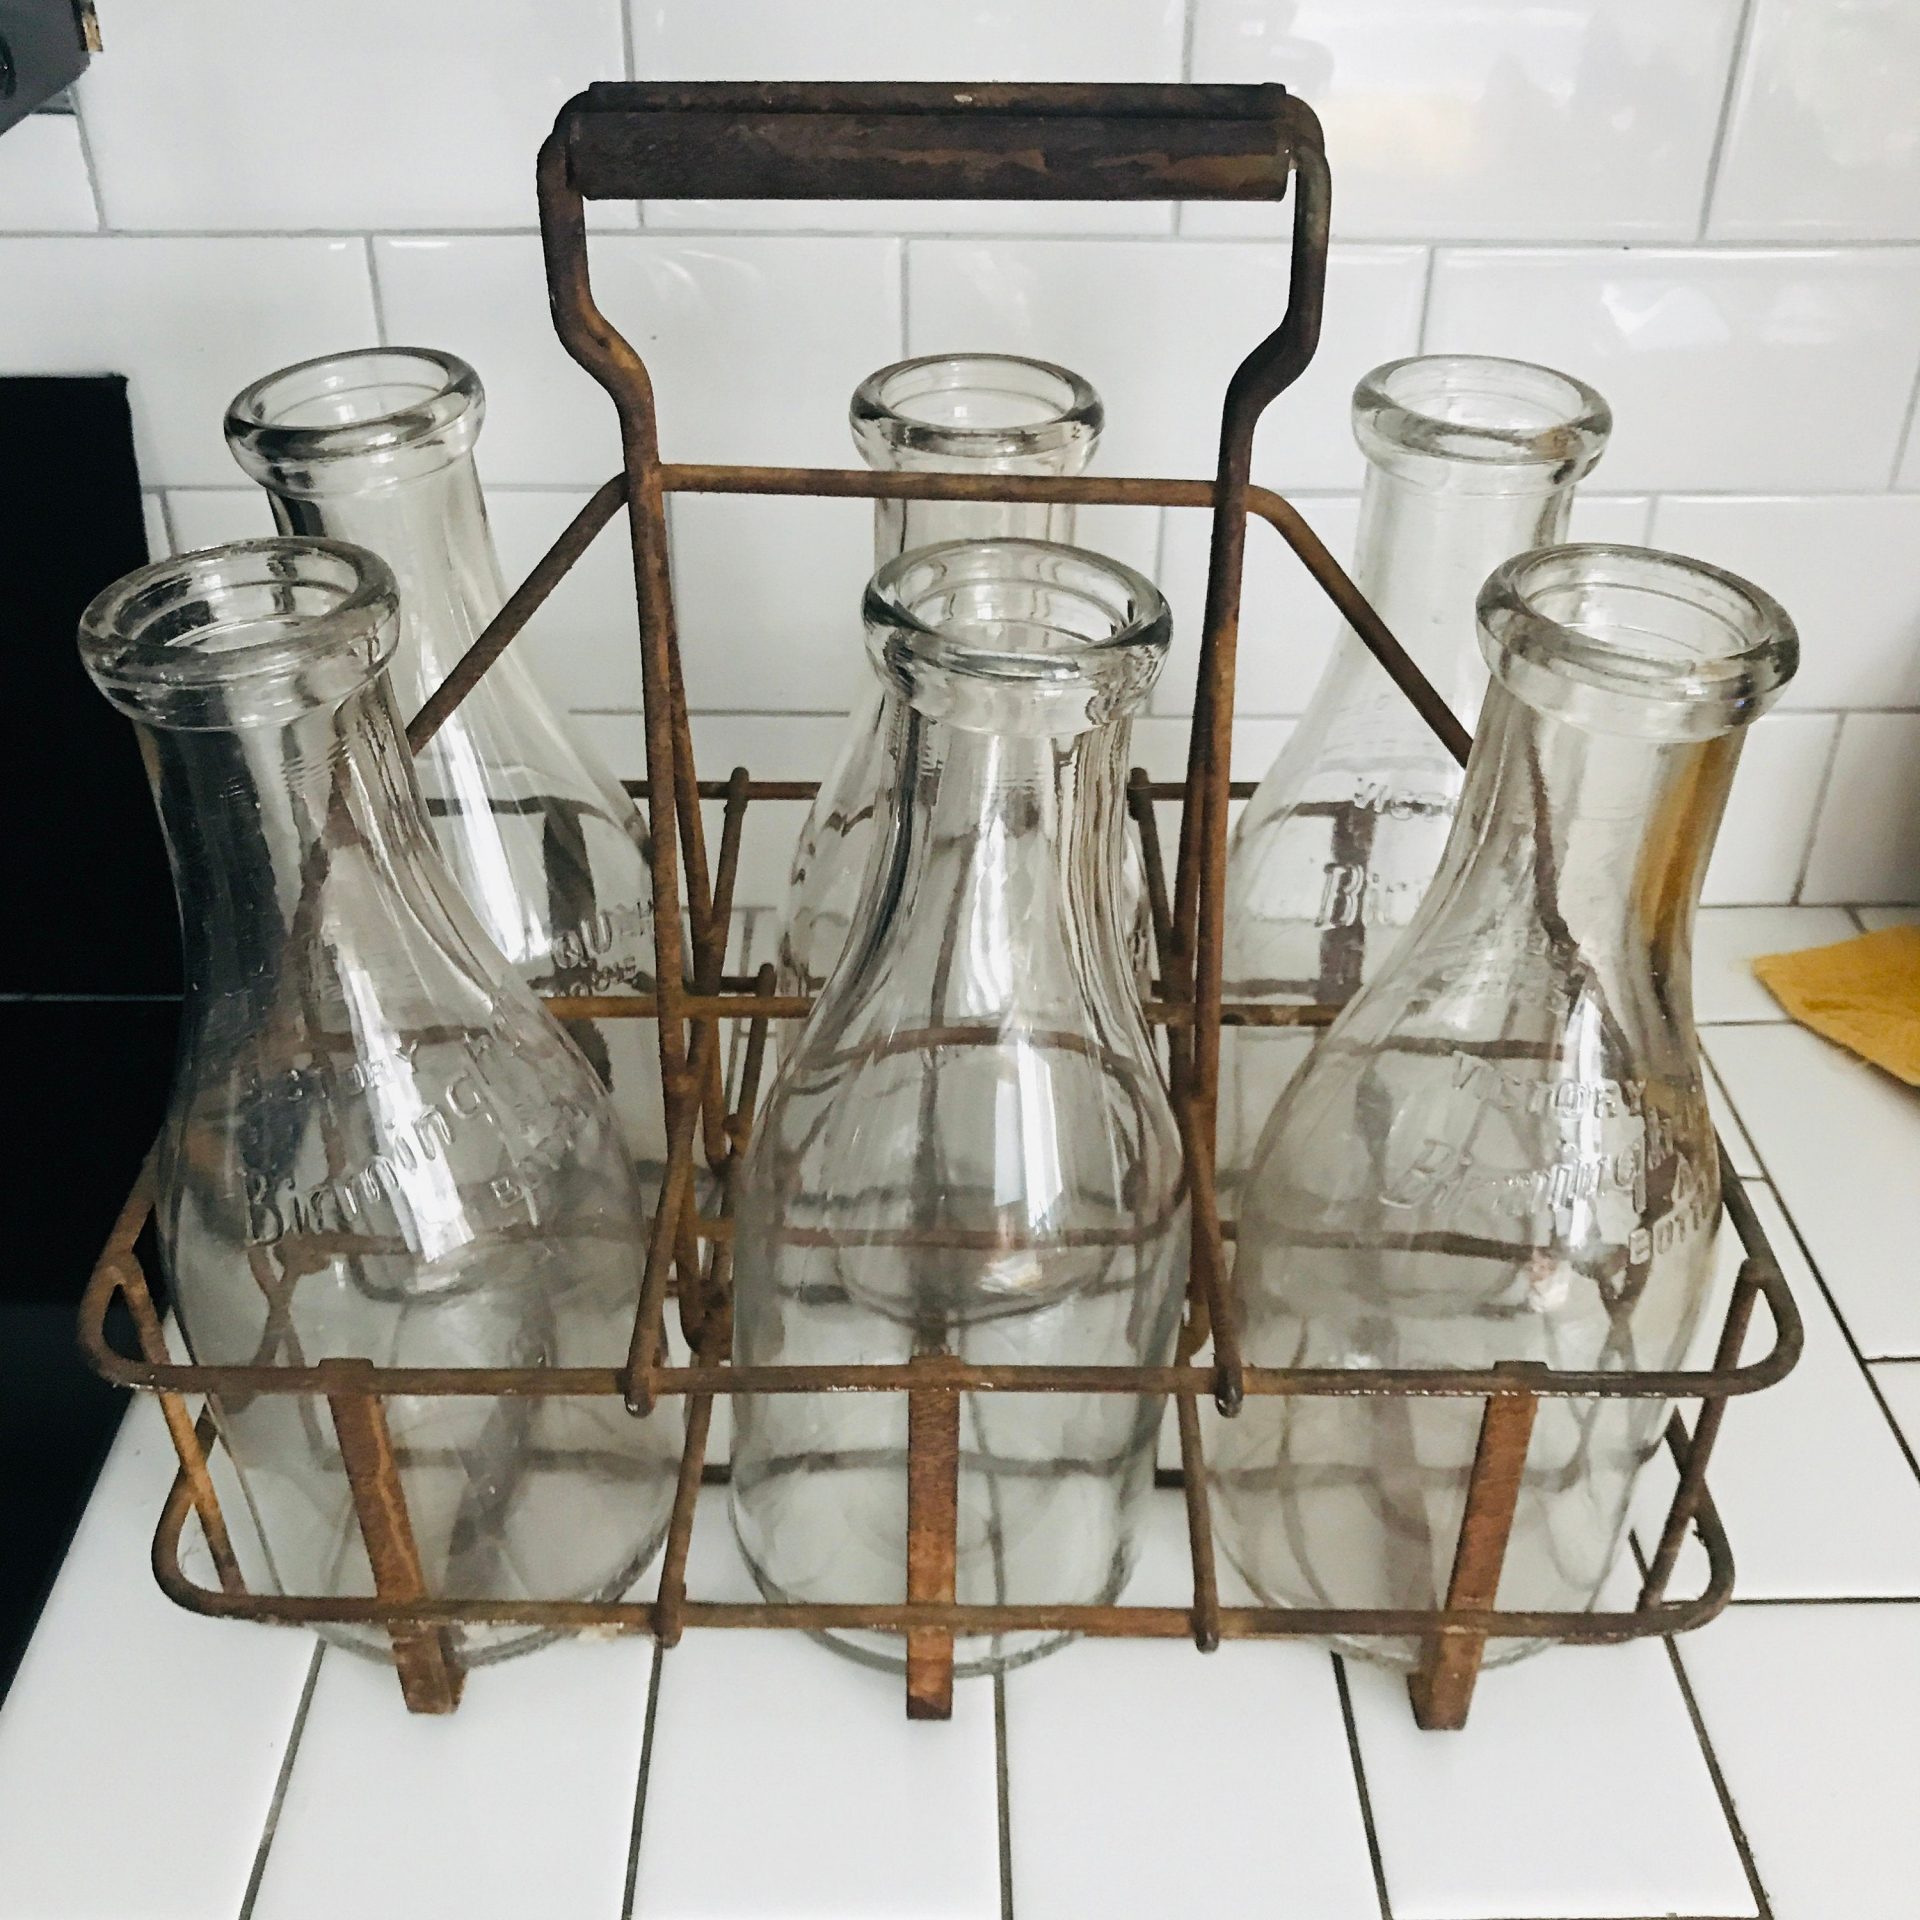 https://www.truevintageantiques.com/wp-content/uploads/2021/05/vintage-milk-bottles-in-metal-delivery-rack-6-quart-size-bottles-birmingham-farmhouse-rustic-collectible-kitchen-decor-60992a515-scaled.jpg